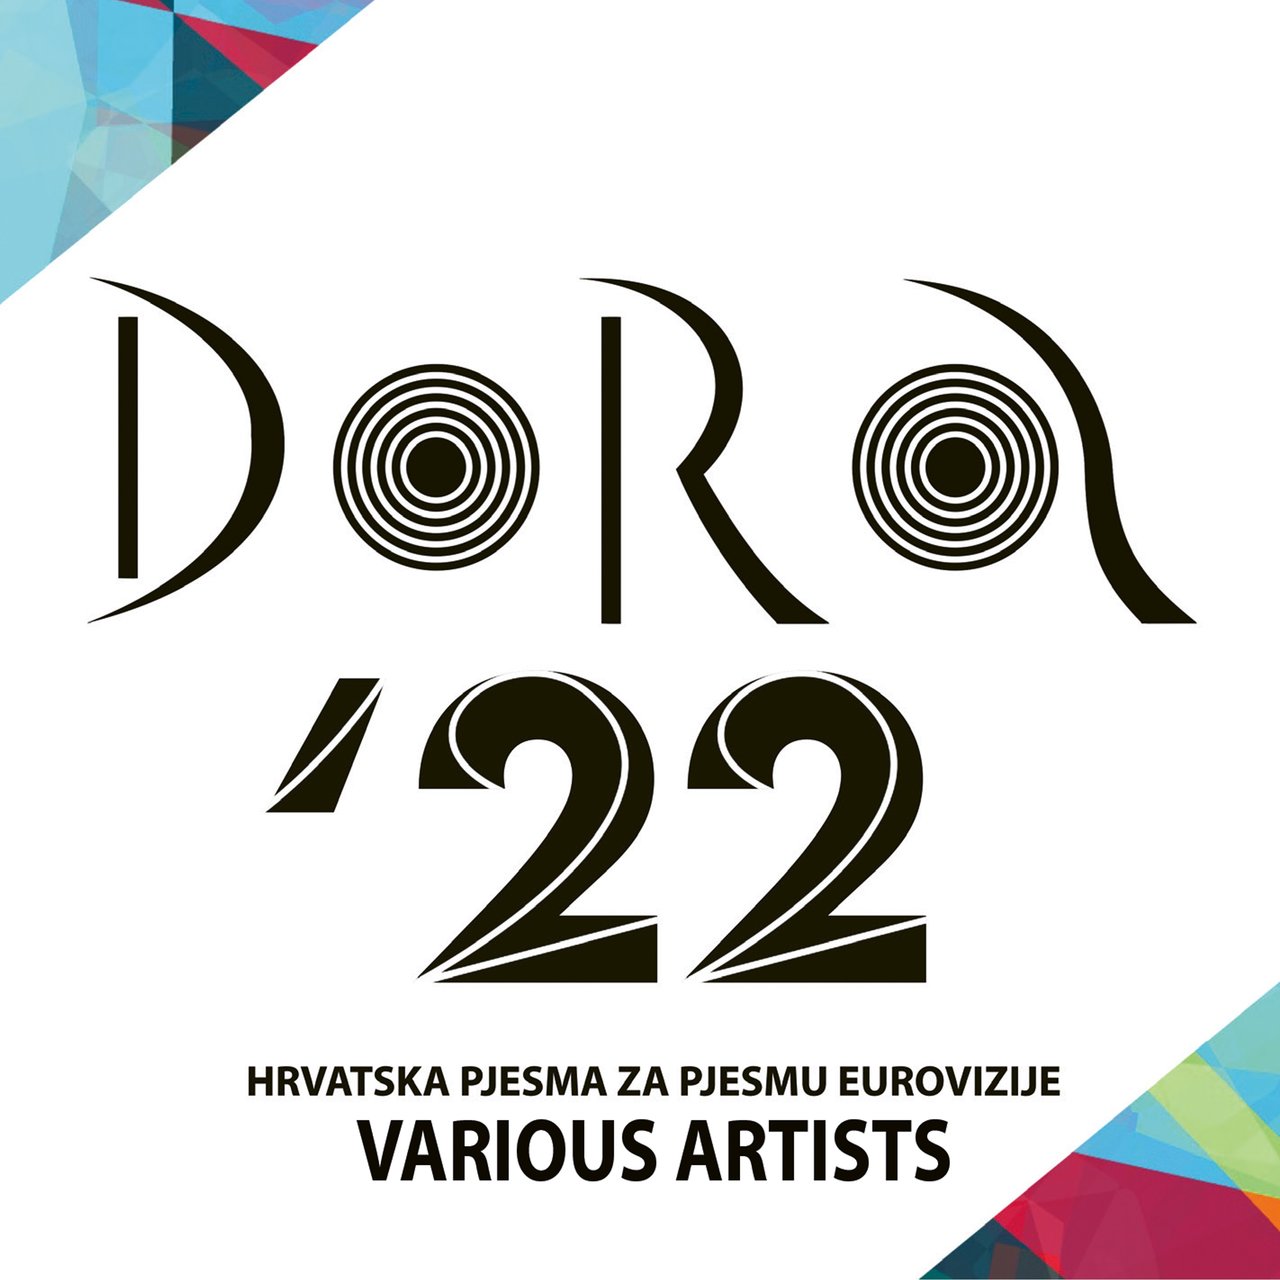 Croatia 🇭🇷 in the Eurovision Song Contest Dora 2022 (Hrvatska Pjesma za Pjesmu Eurovizije) cover artwork